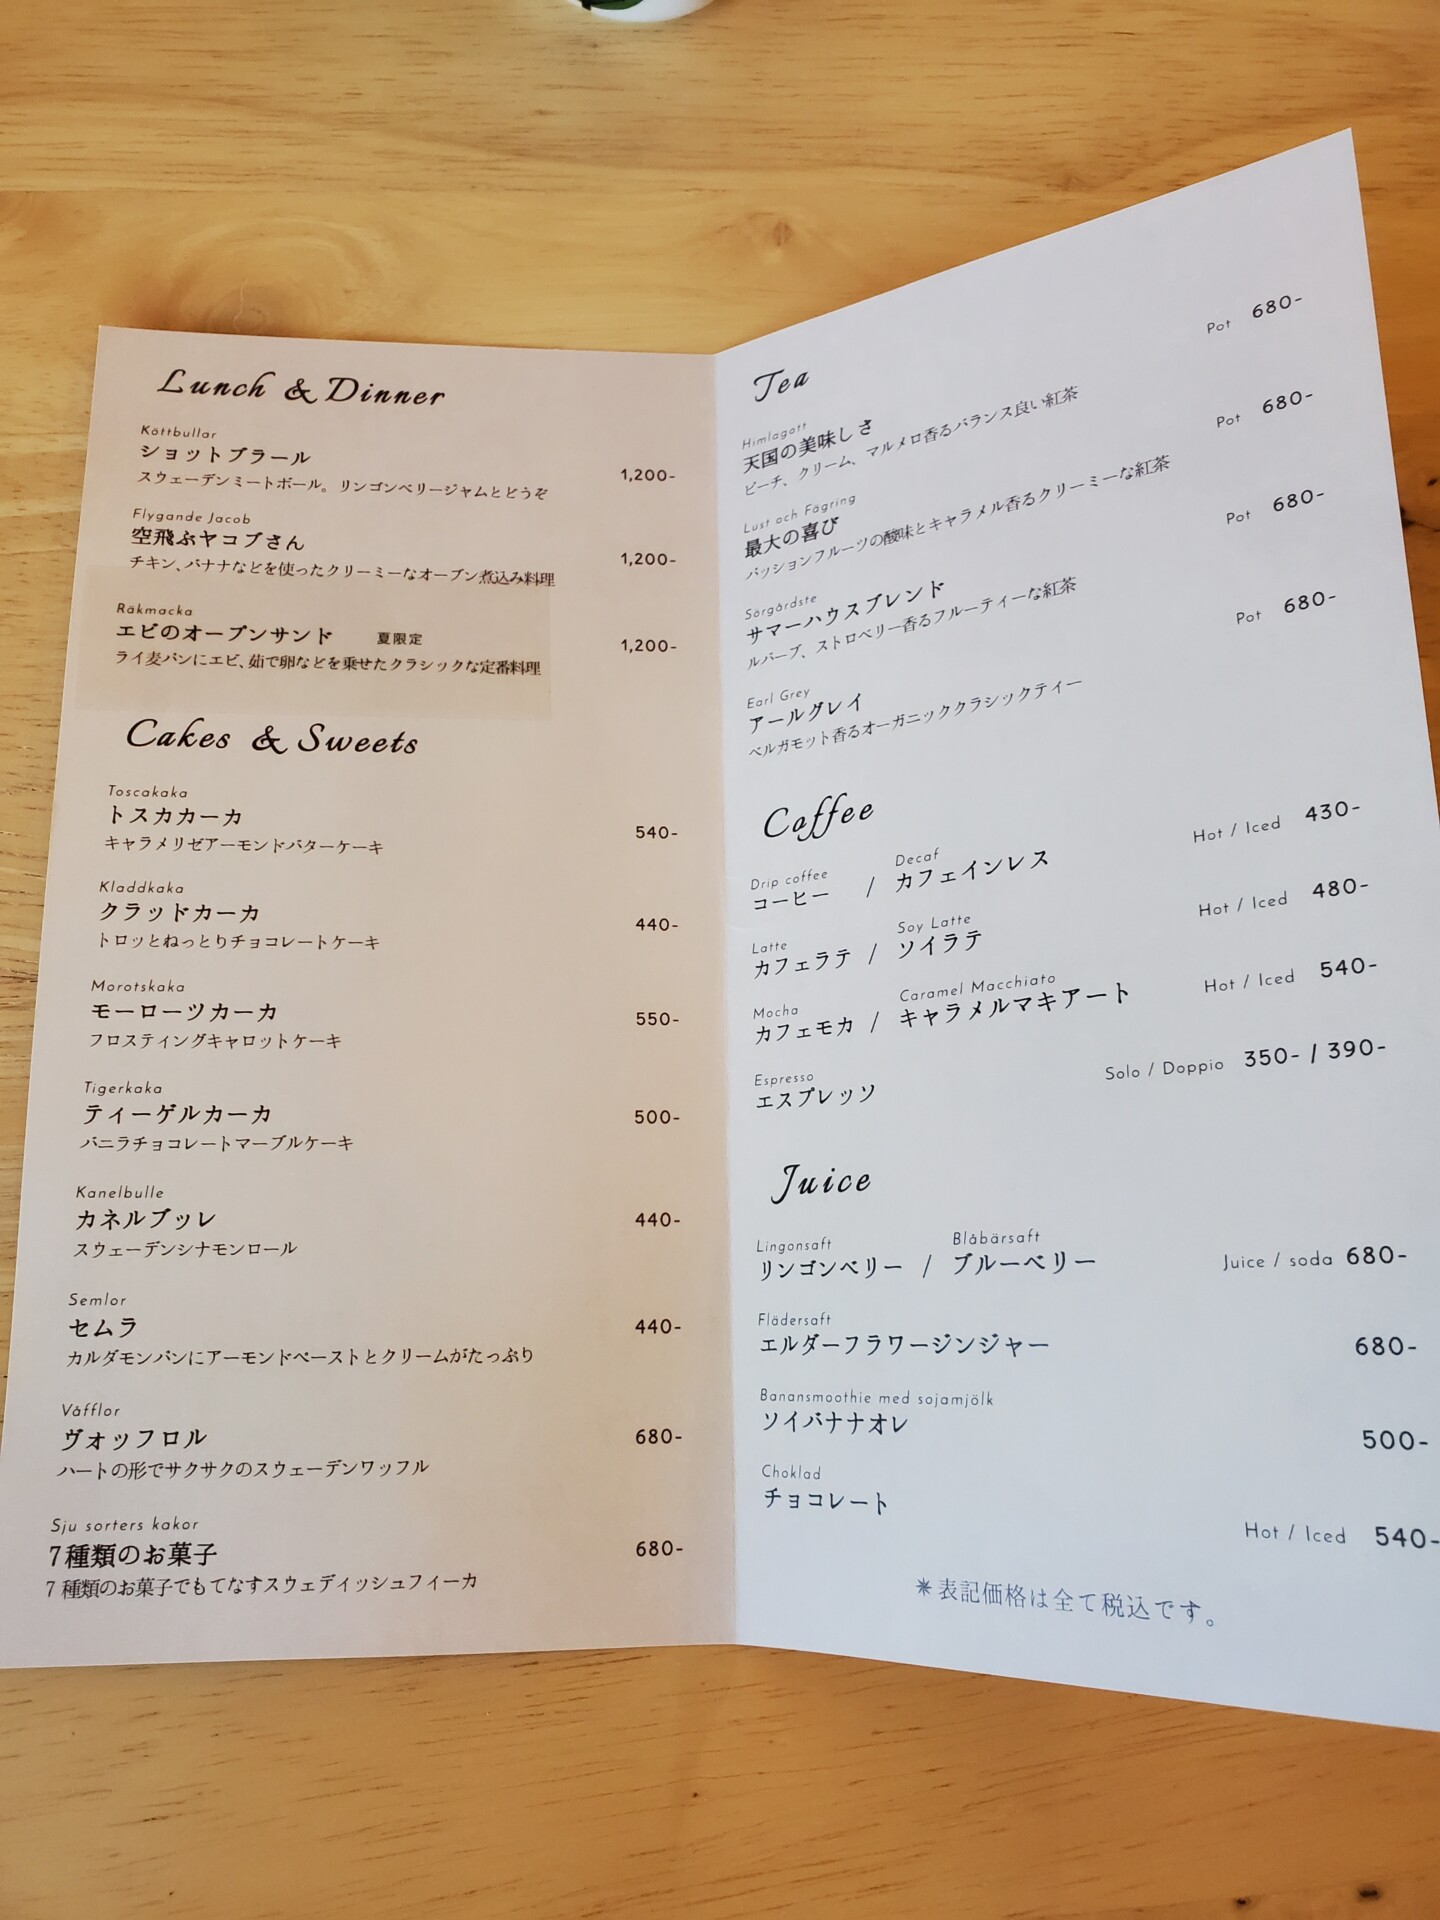 Cafe måneメニュー(夏)